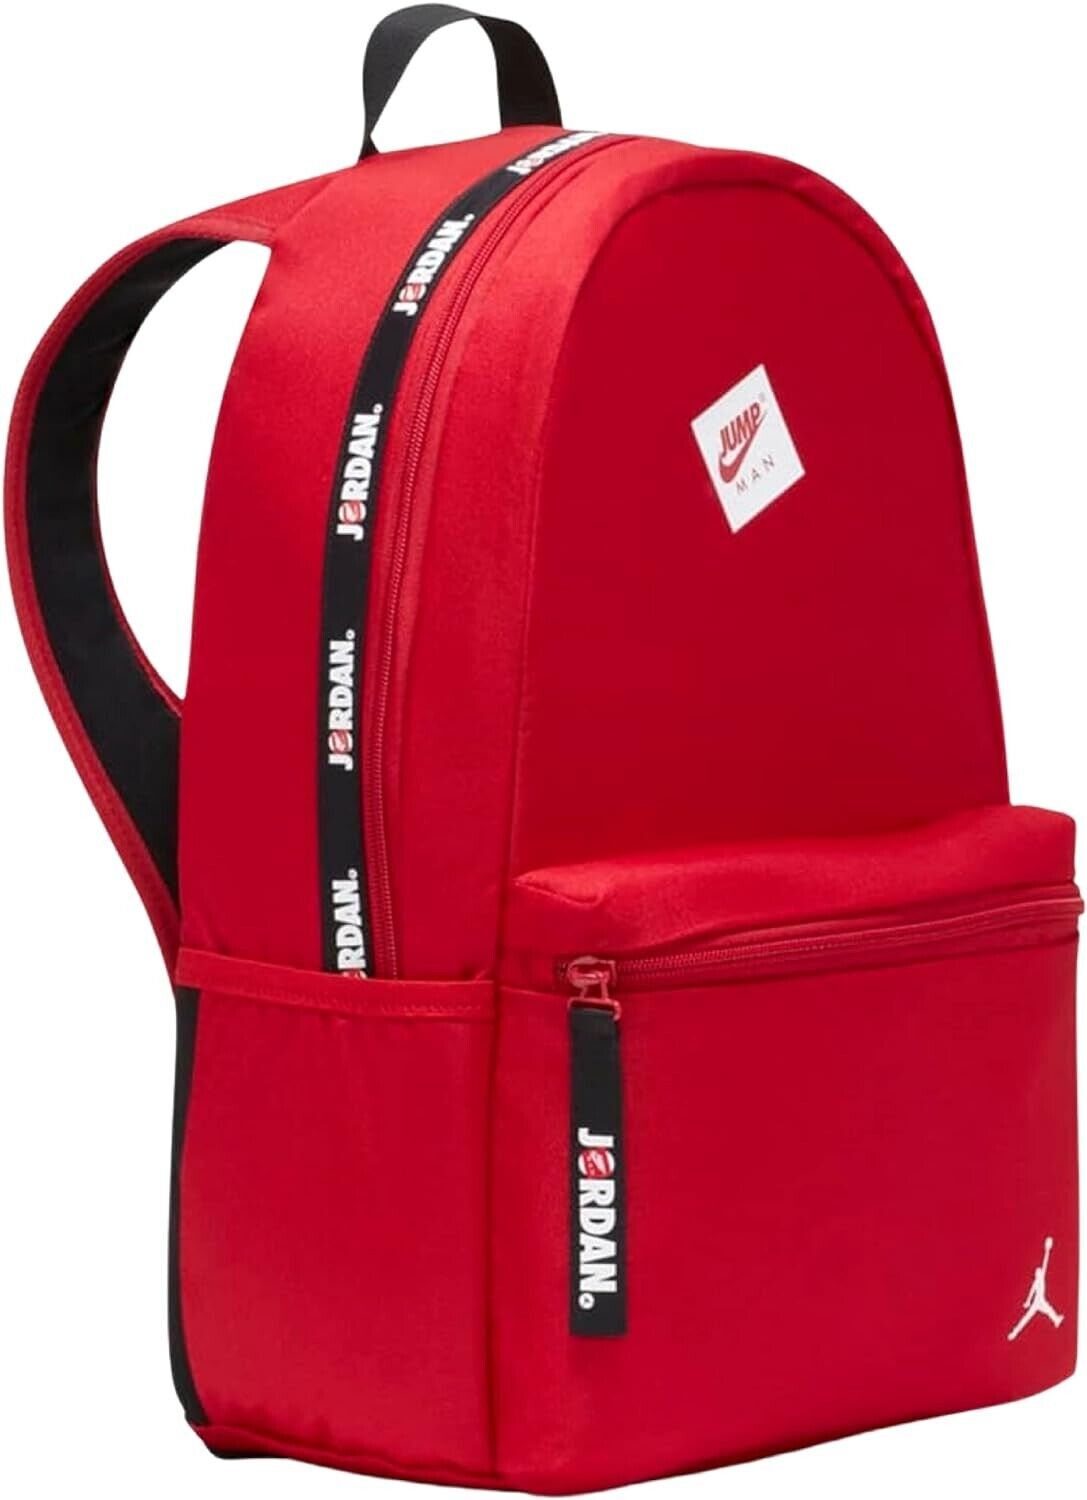 Nike Air Jordan Jumpman Classic Backpack Gym Red/Black Bag w/Pockets